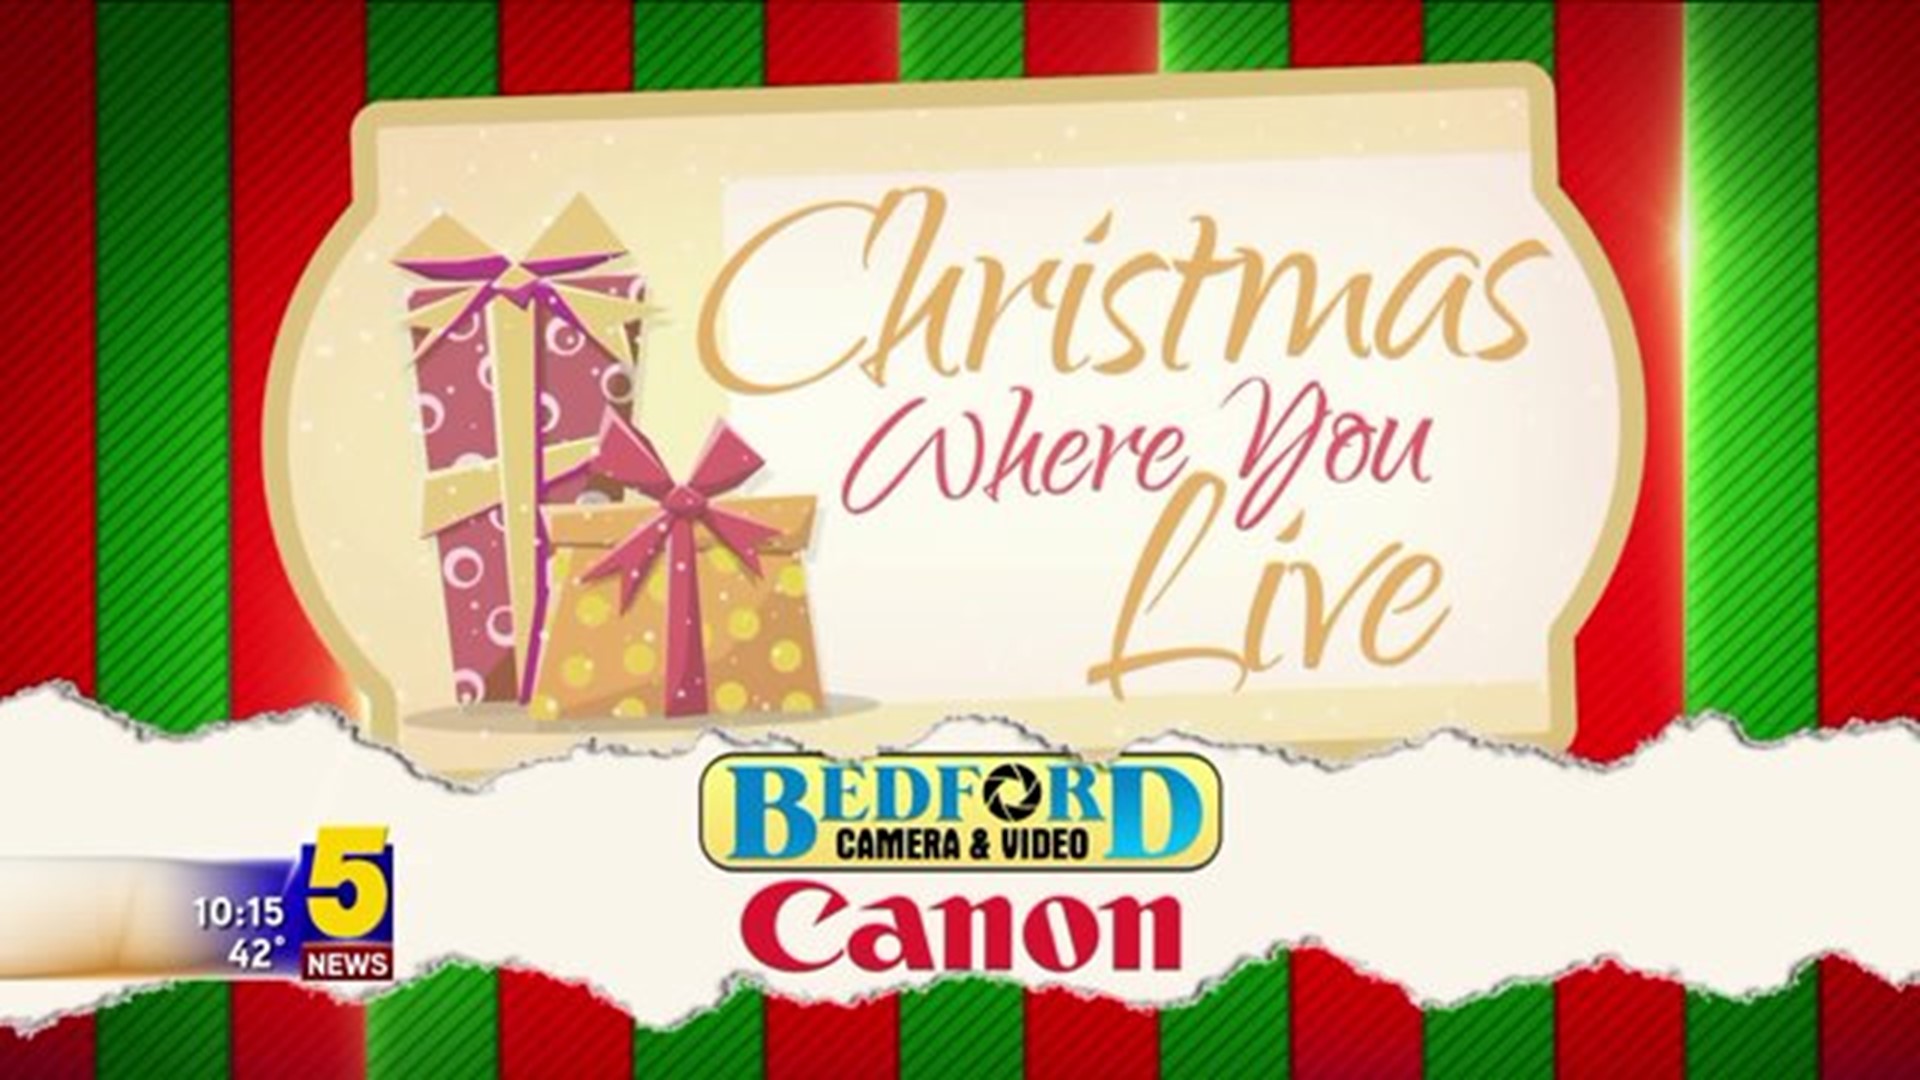 Christmas Where You Live- Bedford Camera & Video- Jones Center Skating Rink